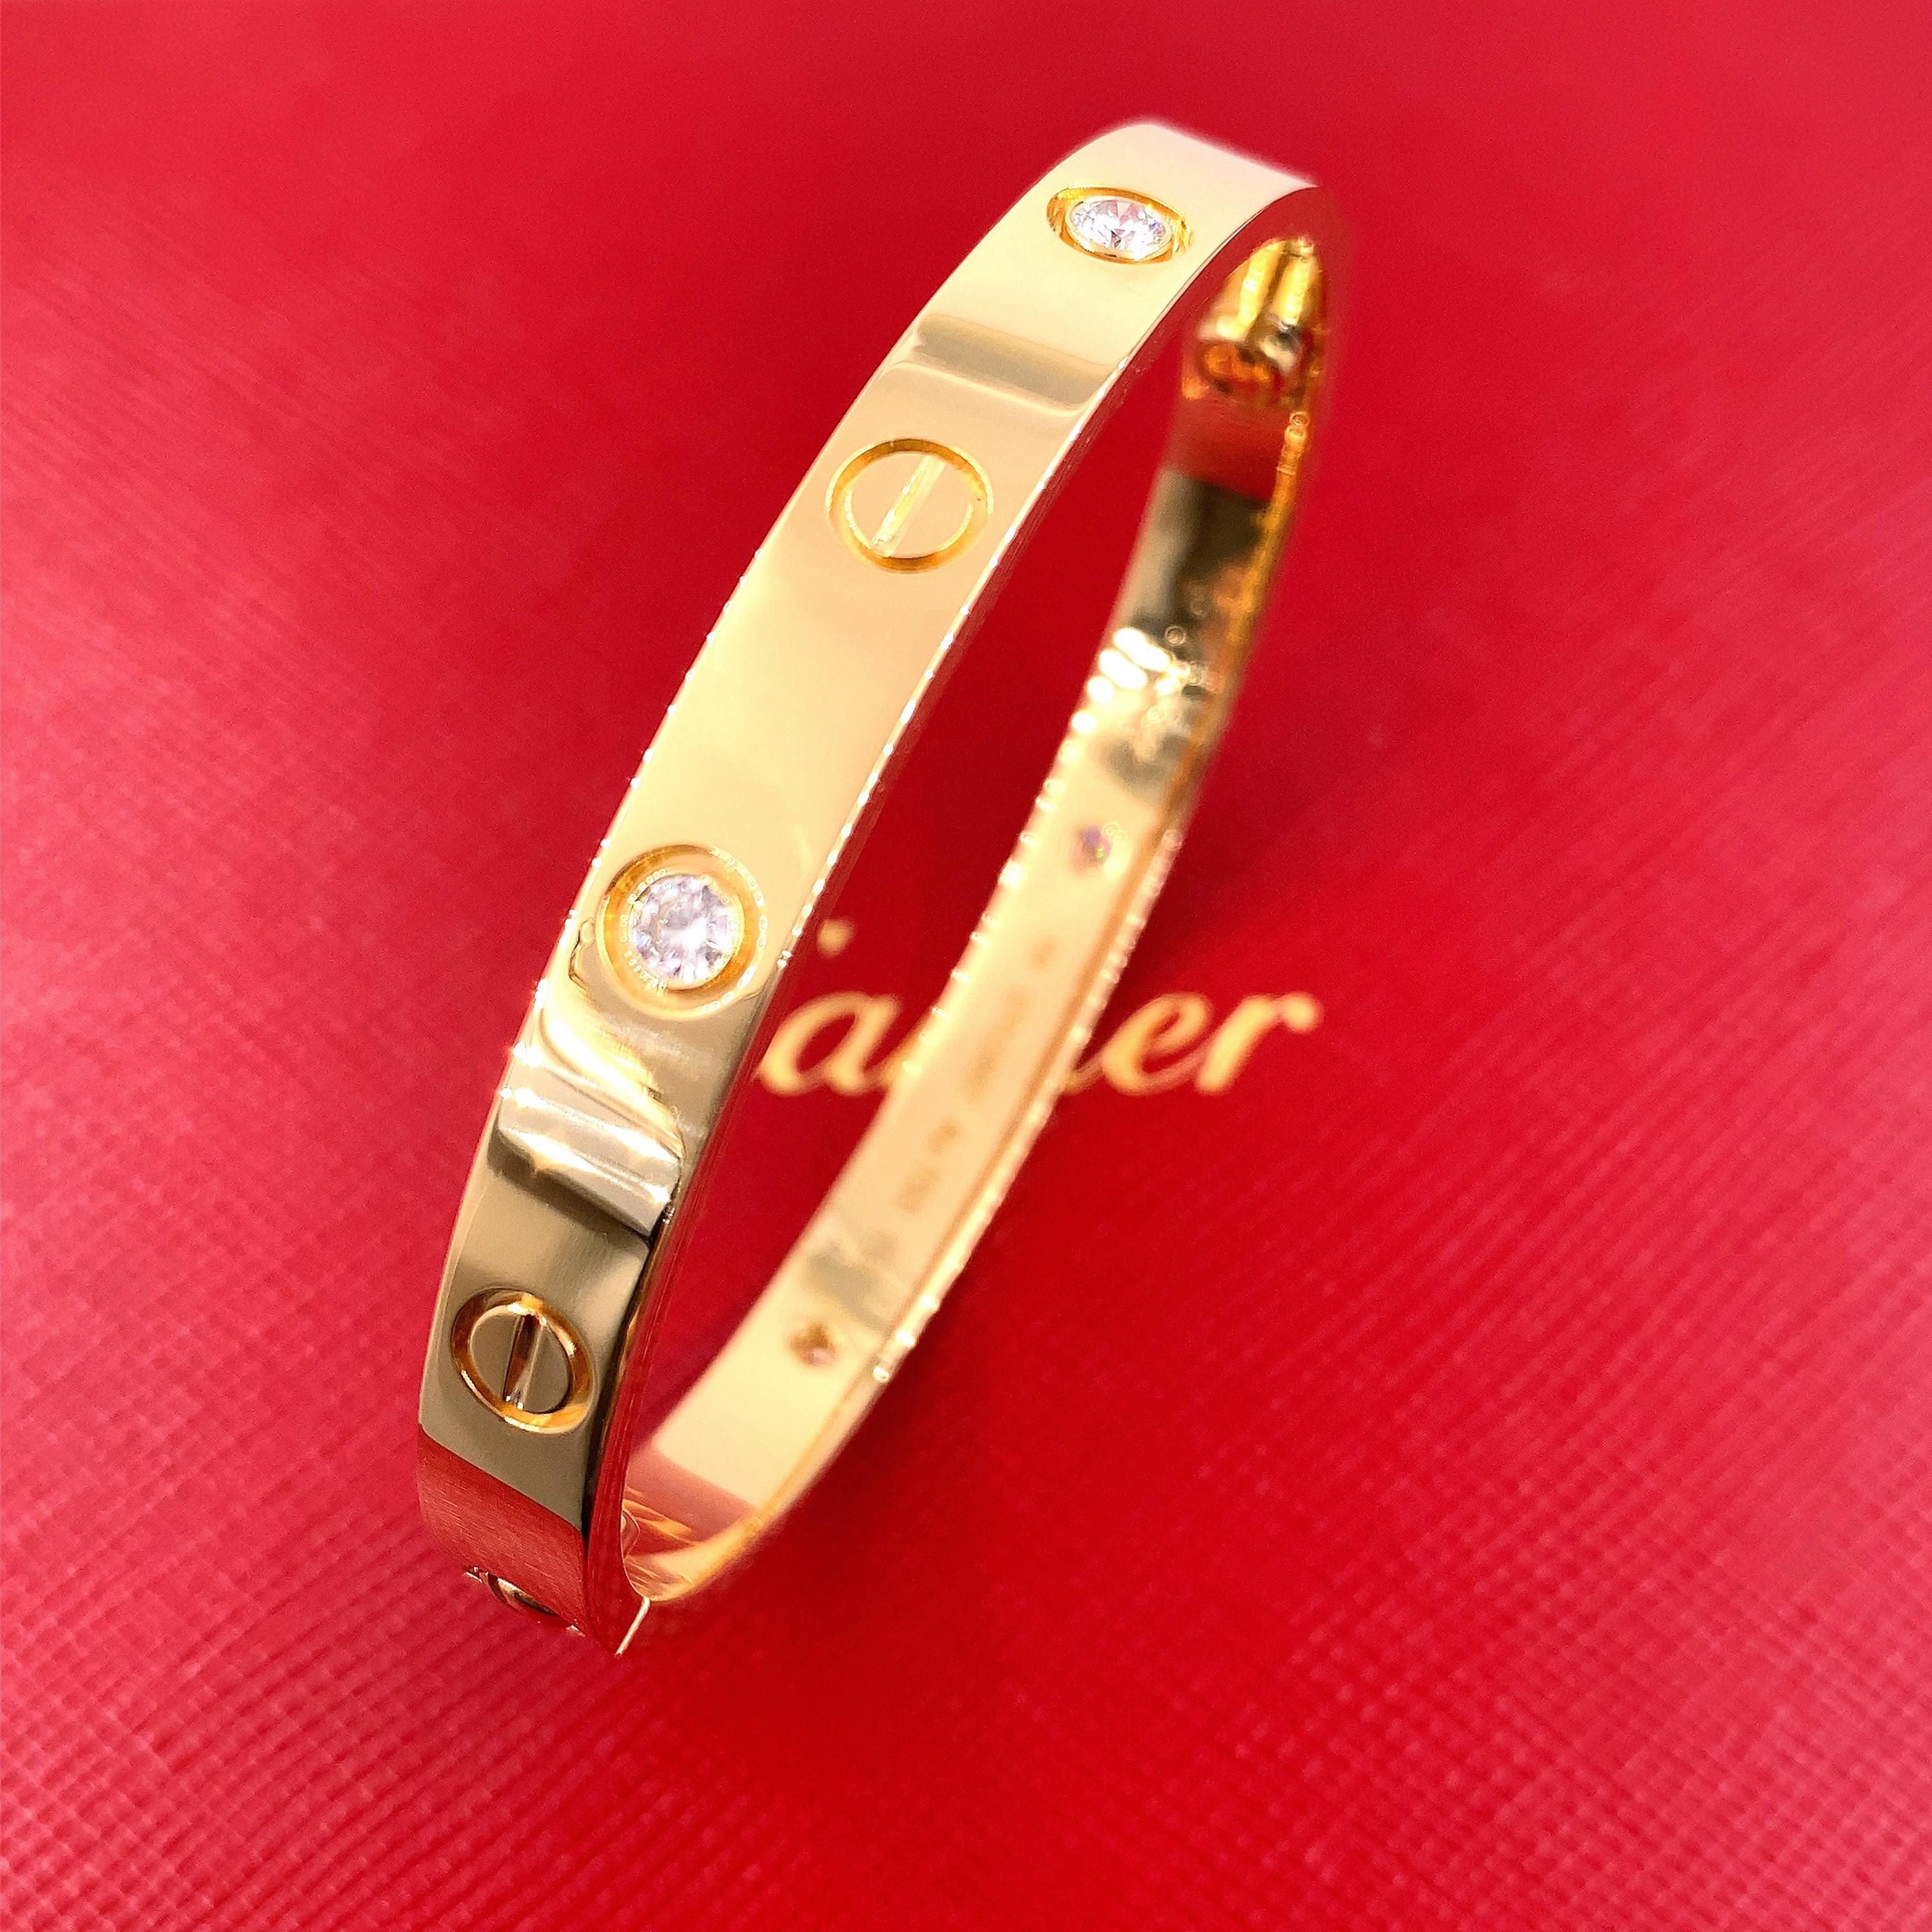 Cartier 4 Diamond Love Bangle Bracelet with Box 18kt Yellow Gold SZ 16 For Sale 3